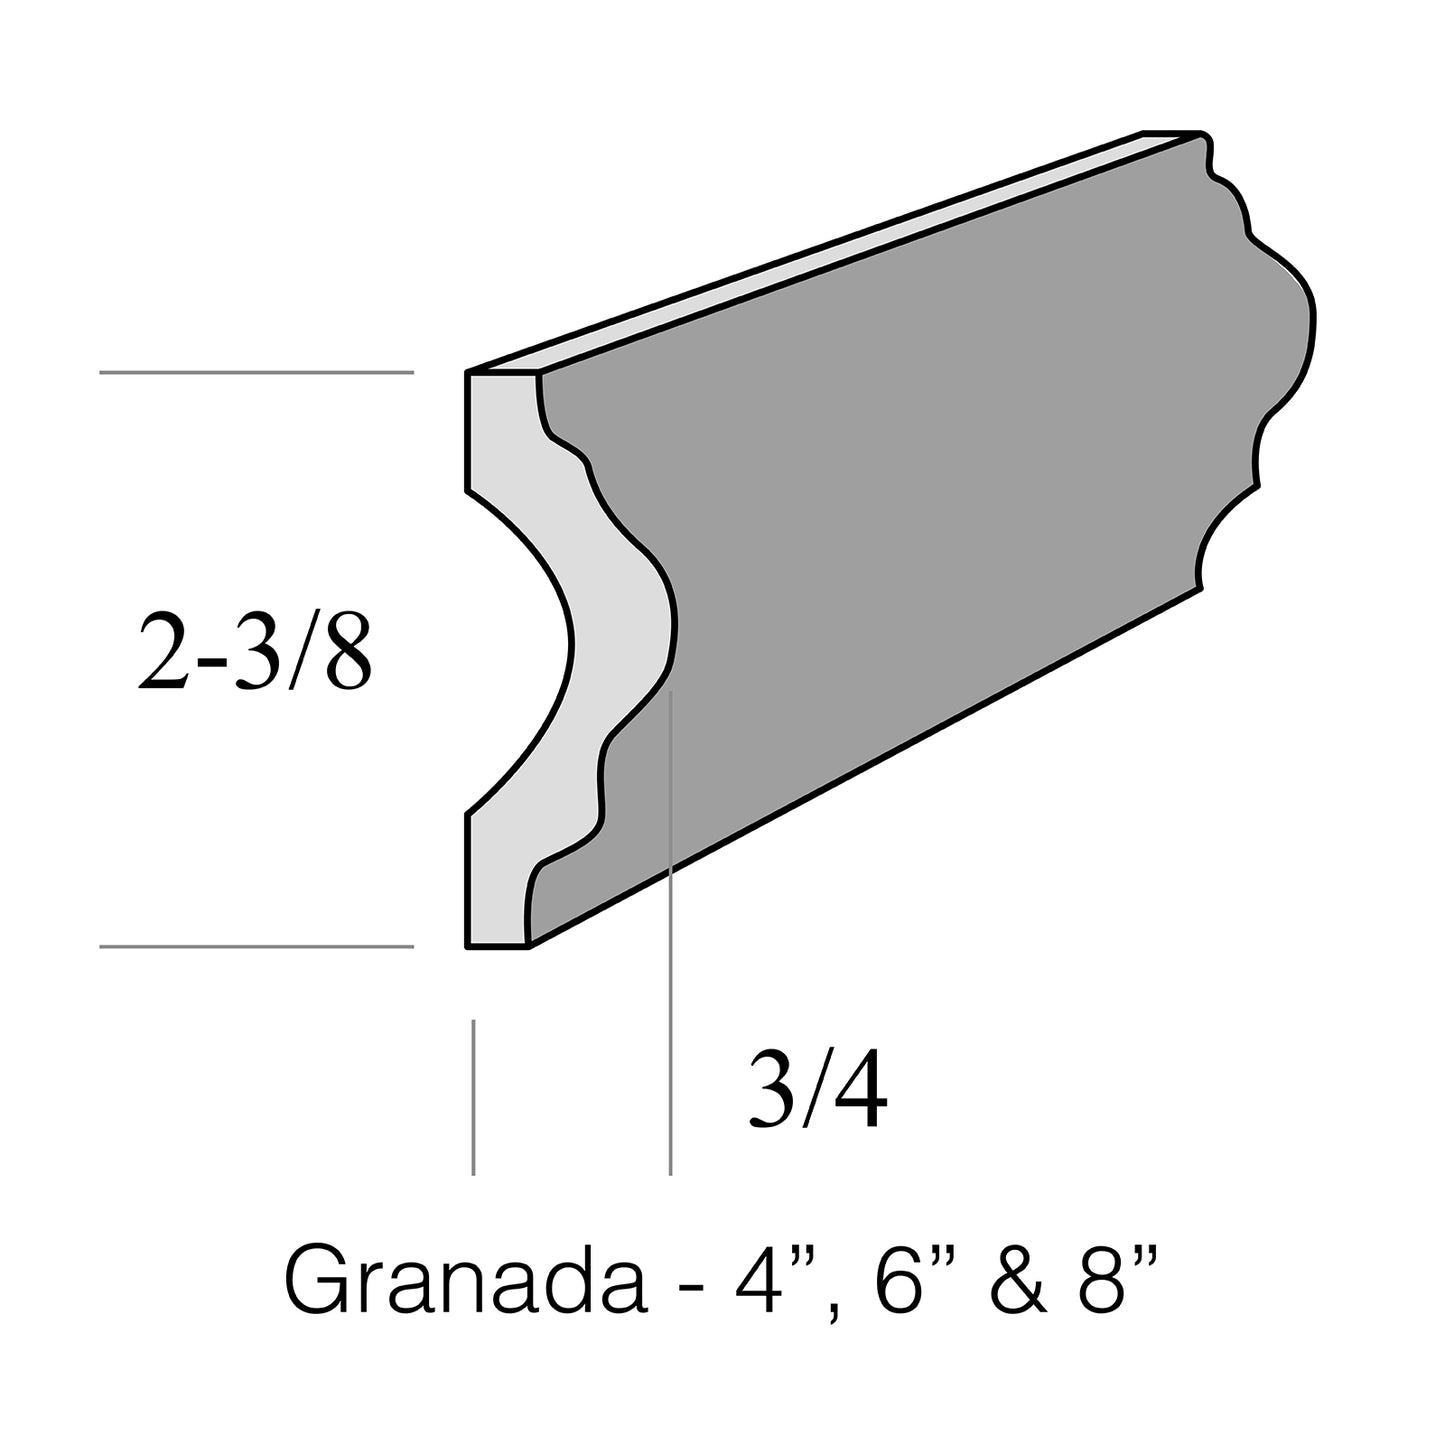 Granada 8"